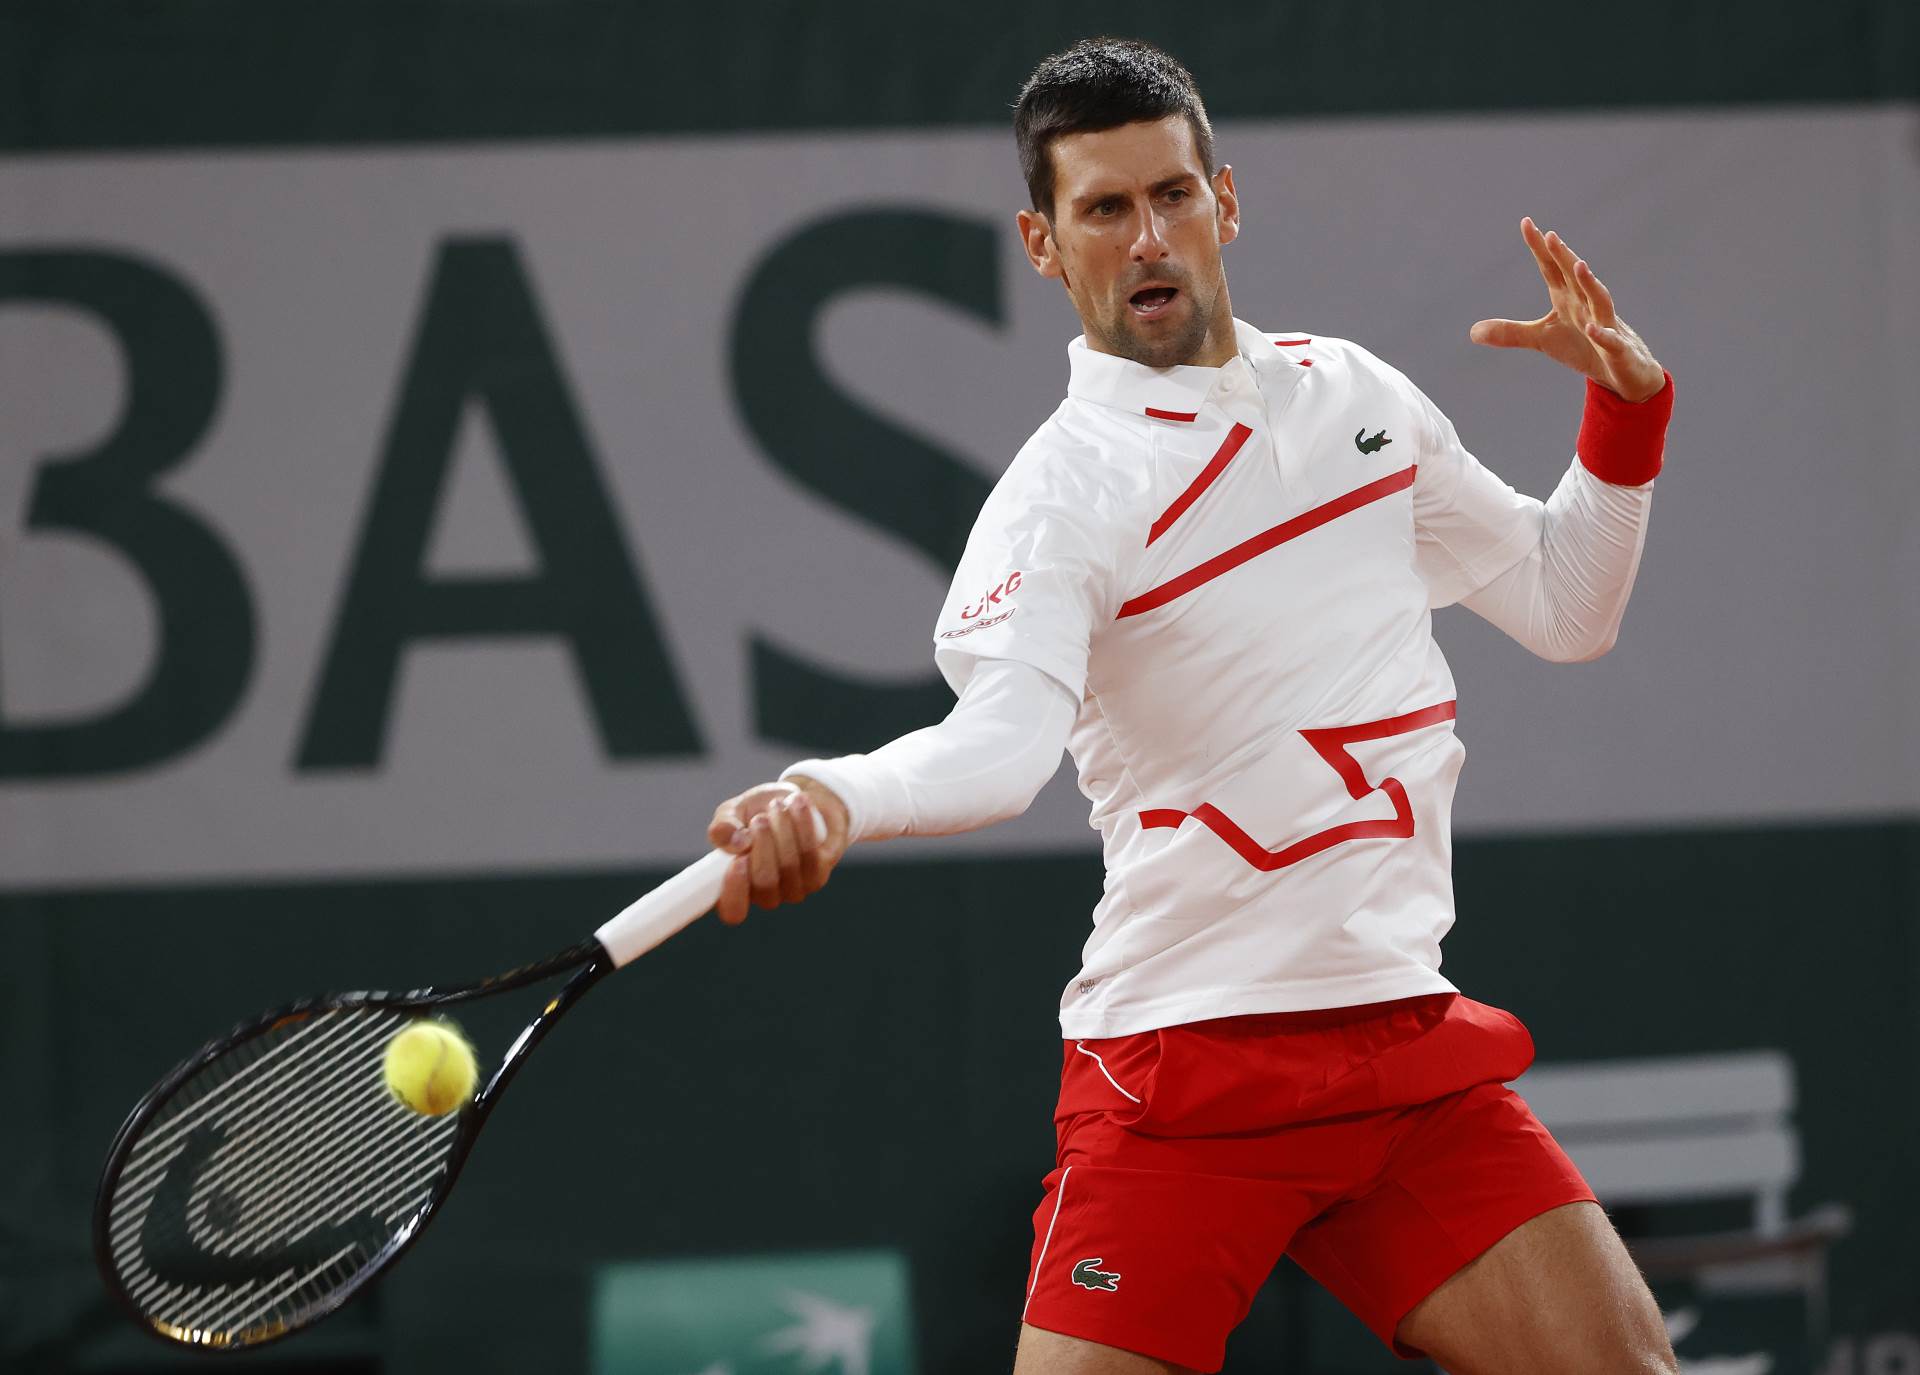  Novak-Djokovic-Rolan-Garos-raspored-igranja-kada-igra-Dusan-Lajovic-tenis 